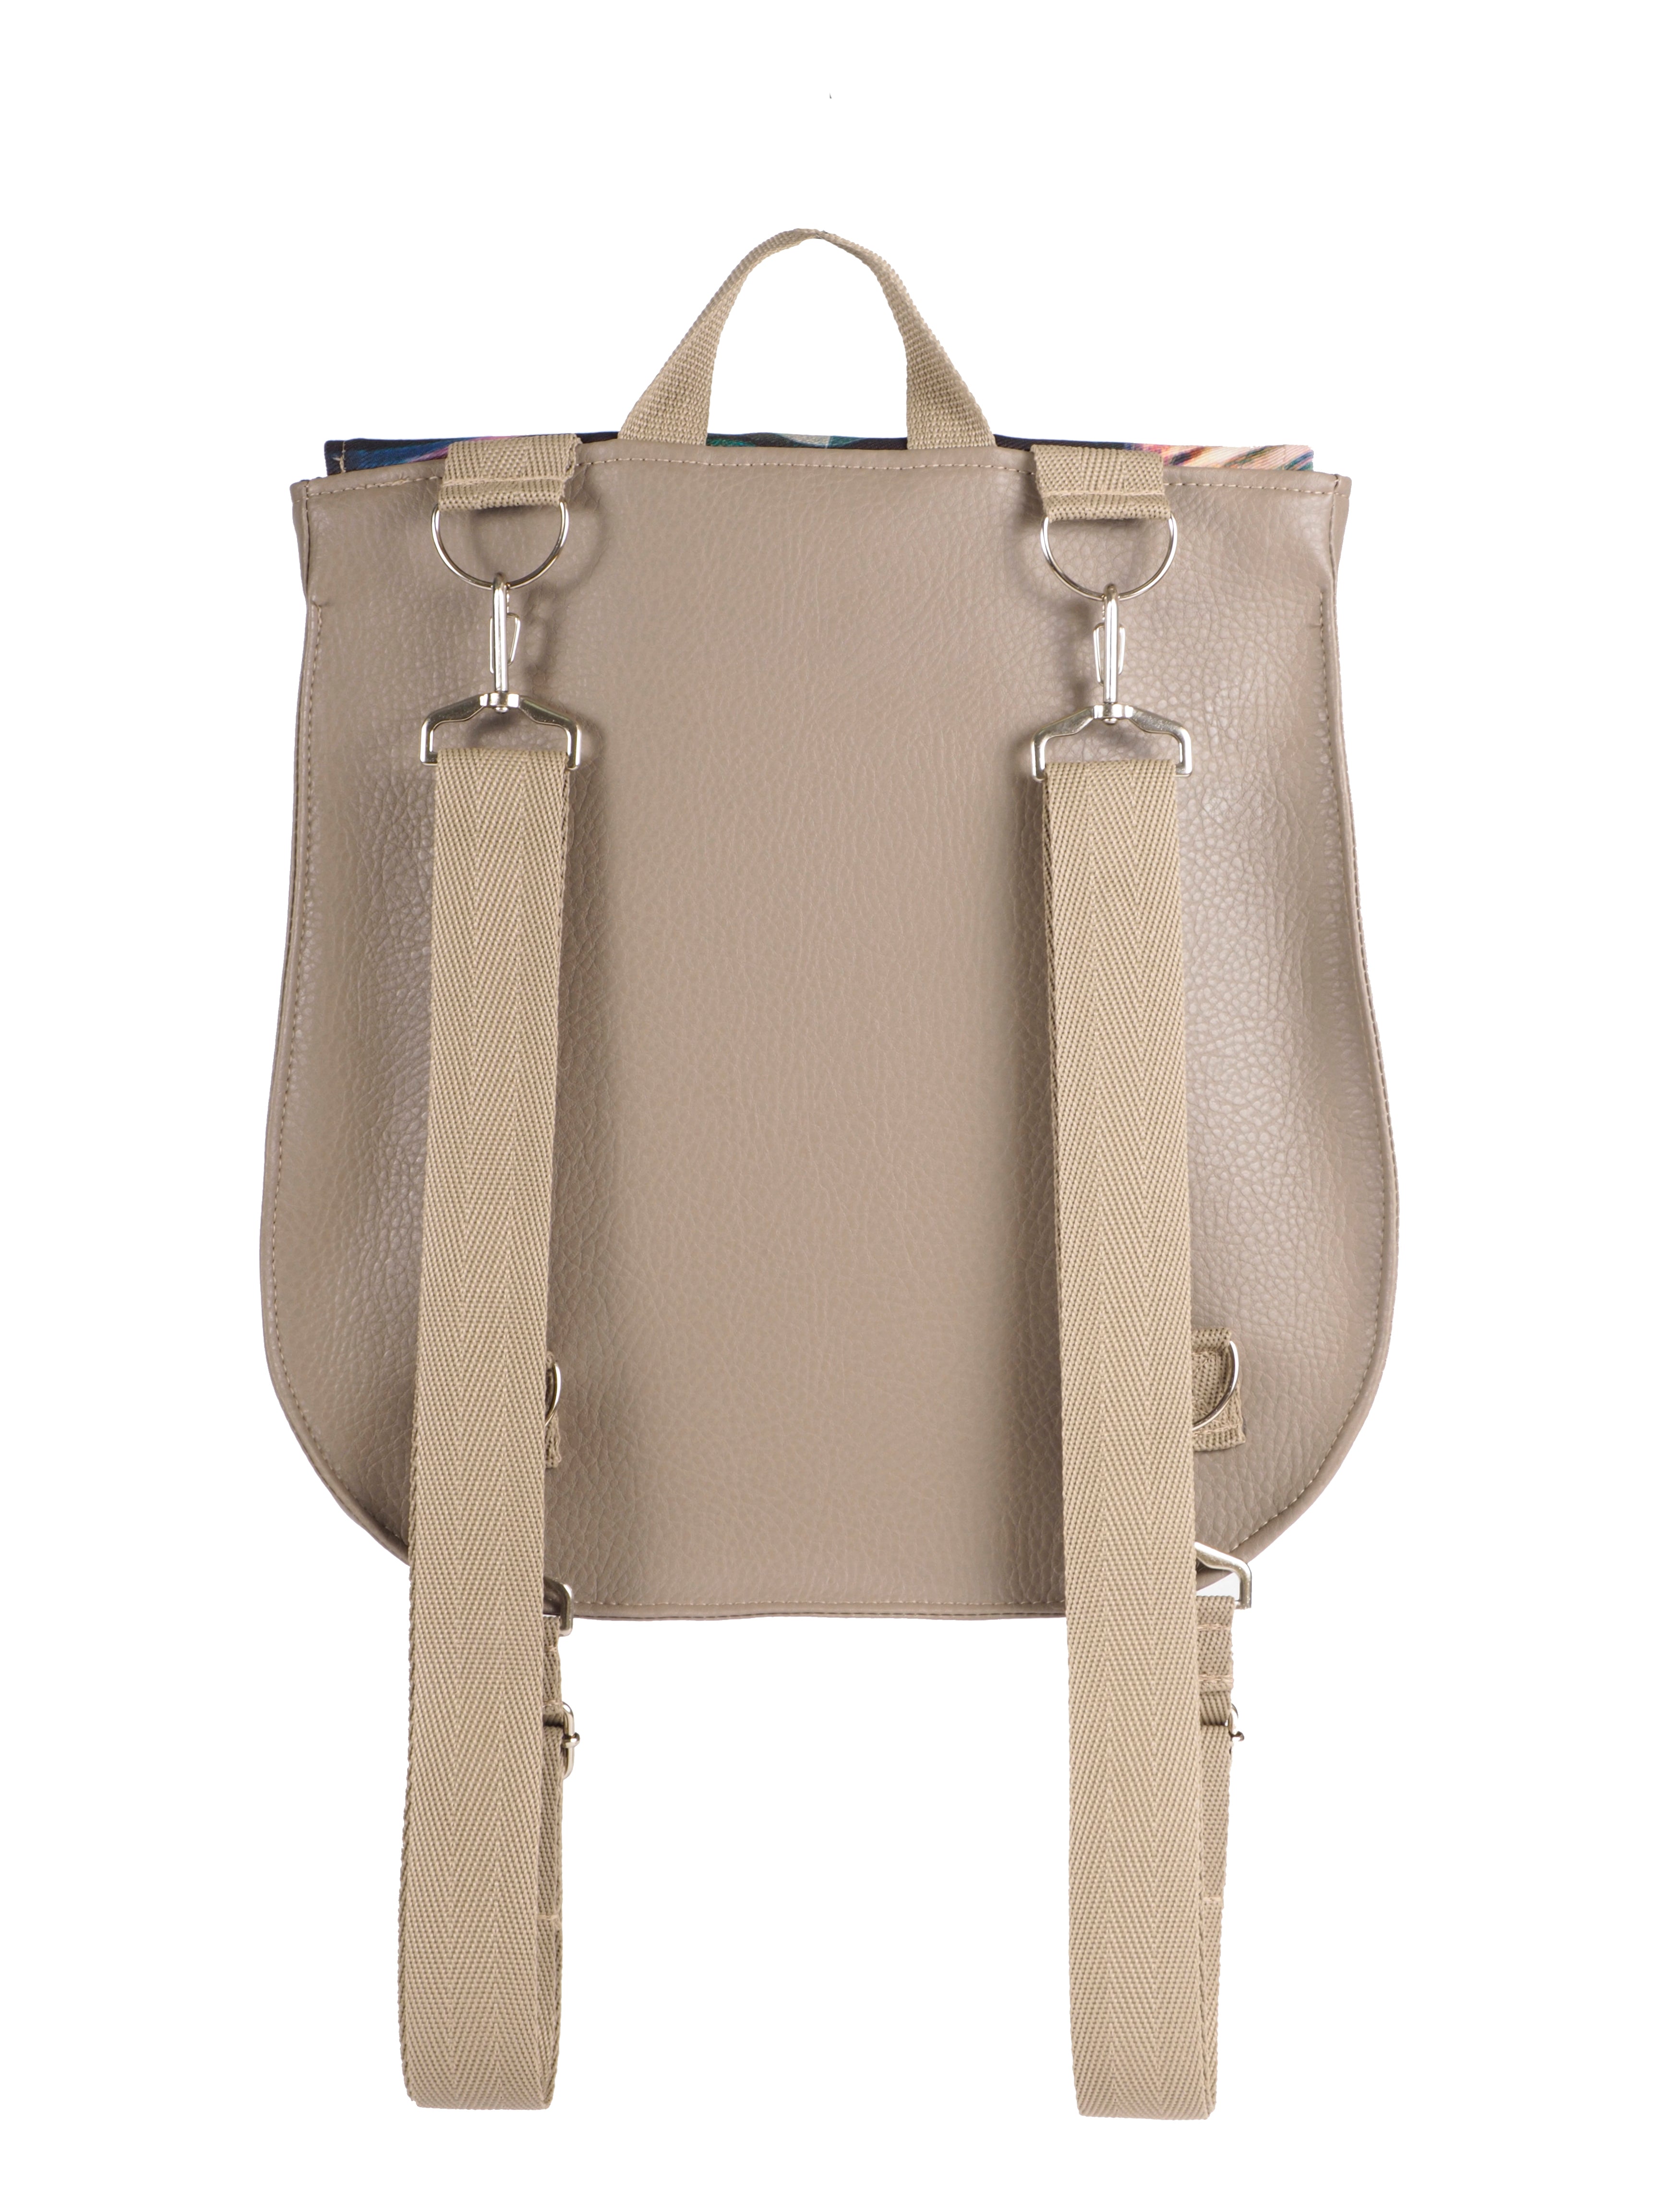 Bardo backpack&bag - Тenderness - Premium bardo backpack&bag from BARDO ART WORKS - Just lv85.00! Shop now at BARDO ART WORKS